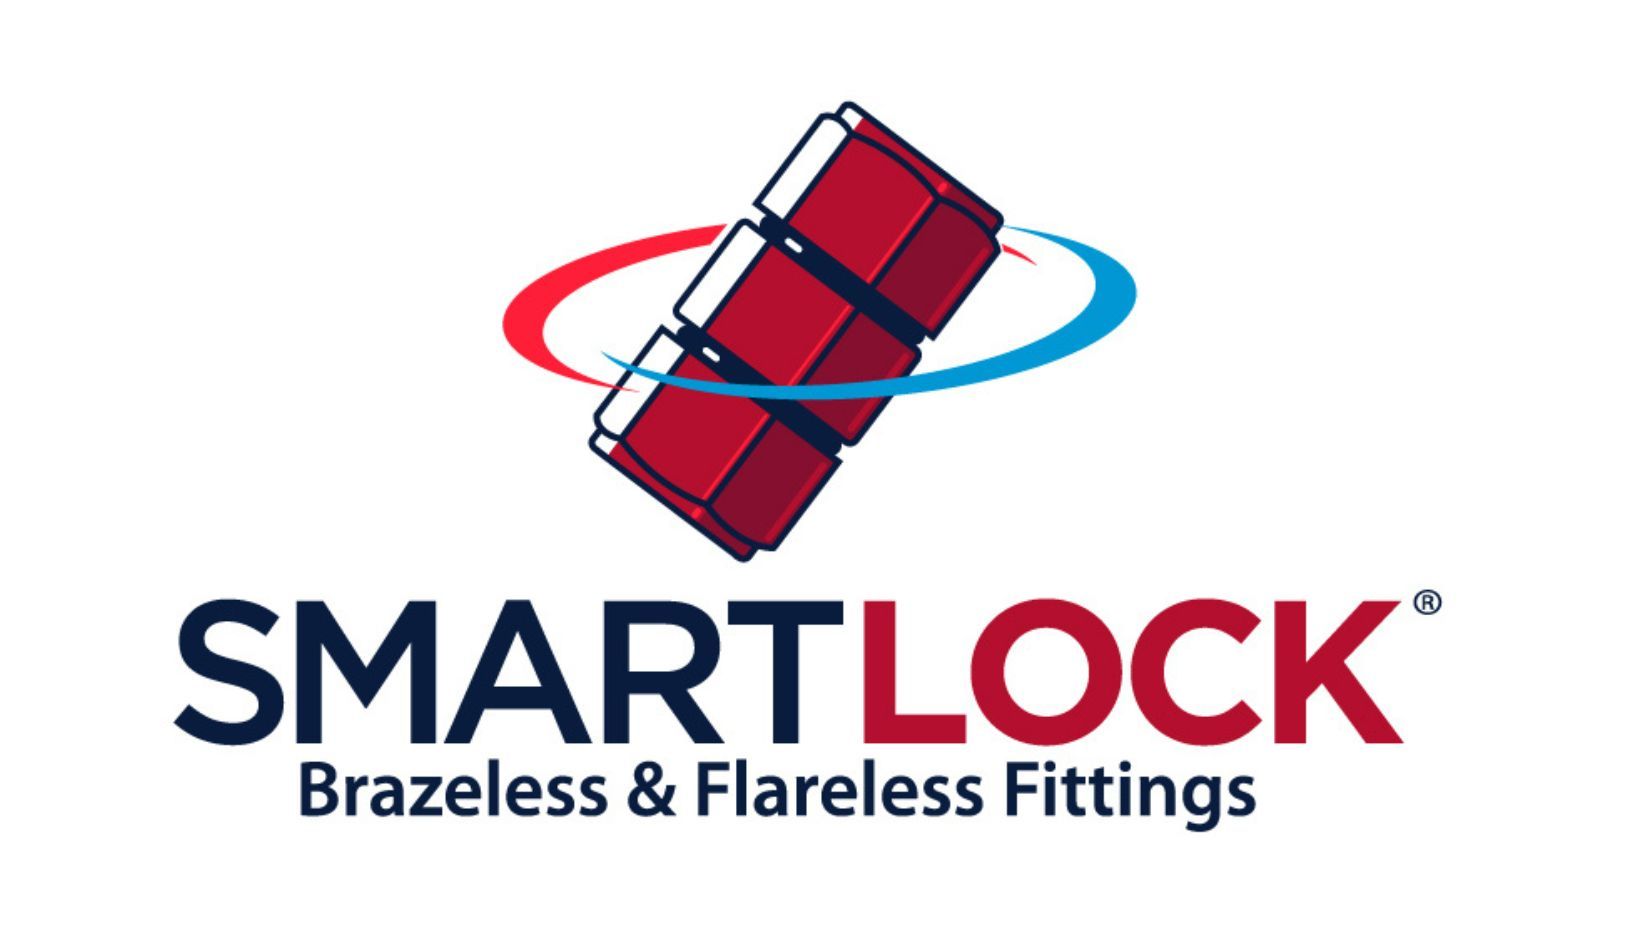 The Global SmartLock Group